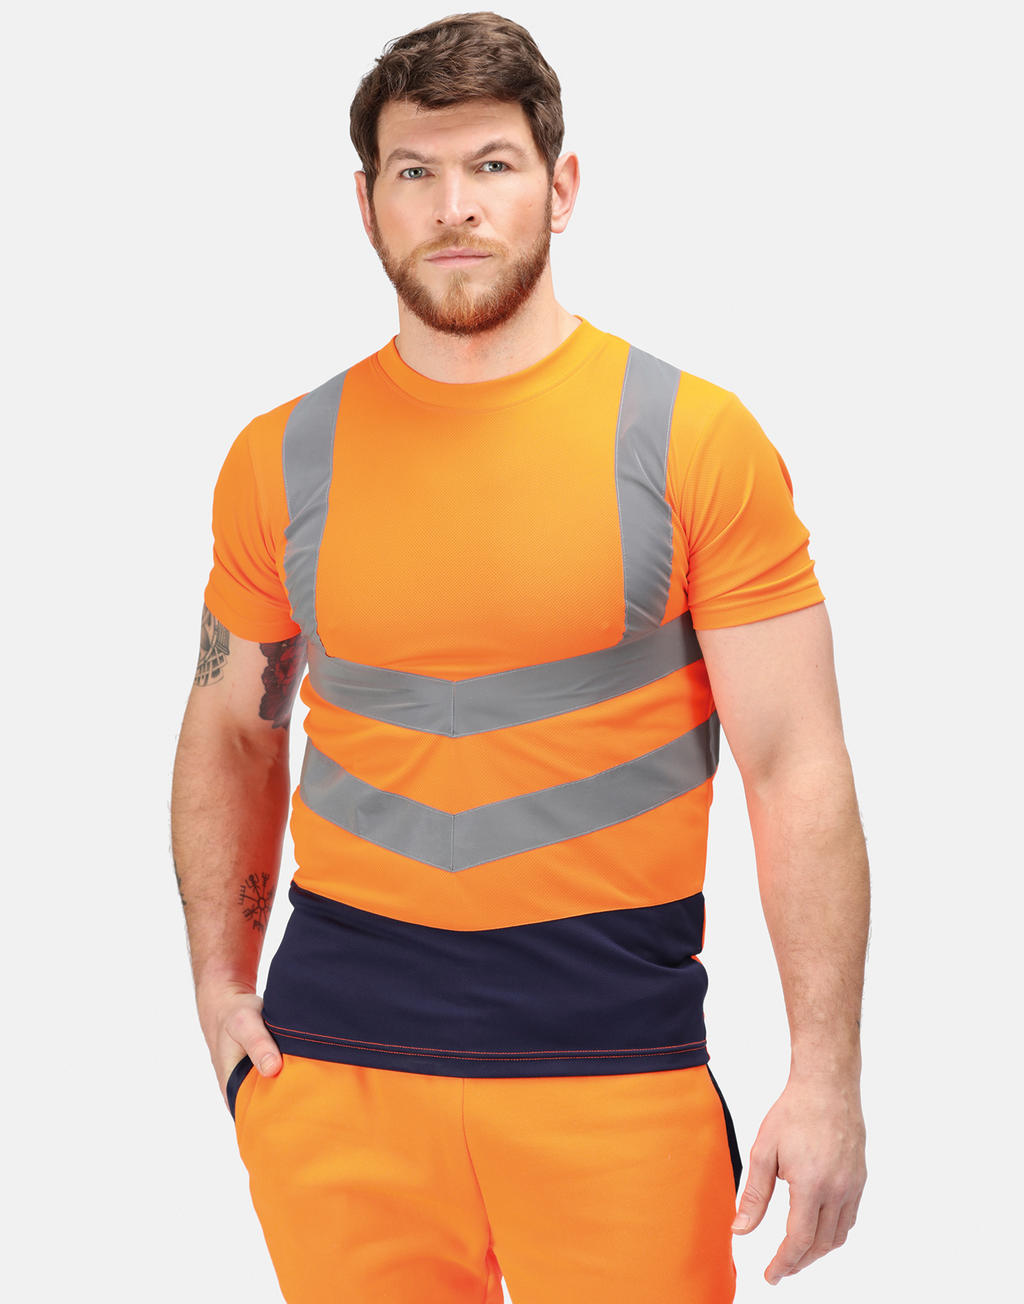  Pro Hi Vis T-Shirt in Farbe Orange/Navy